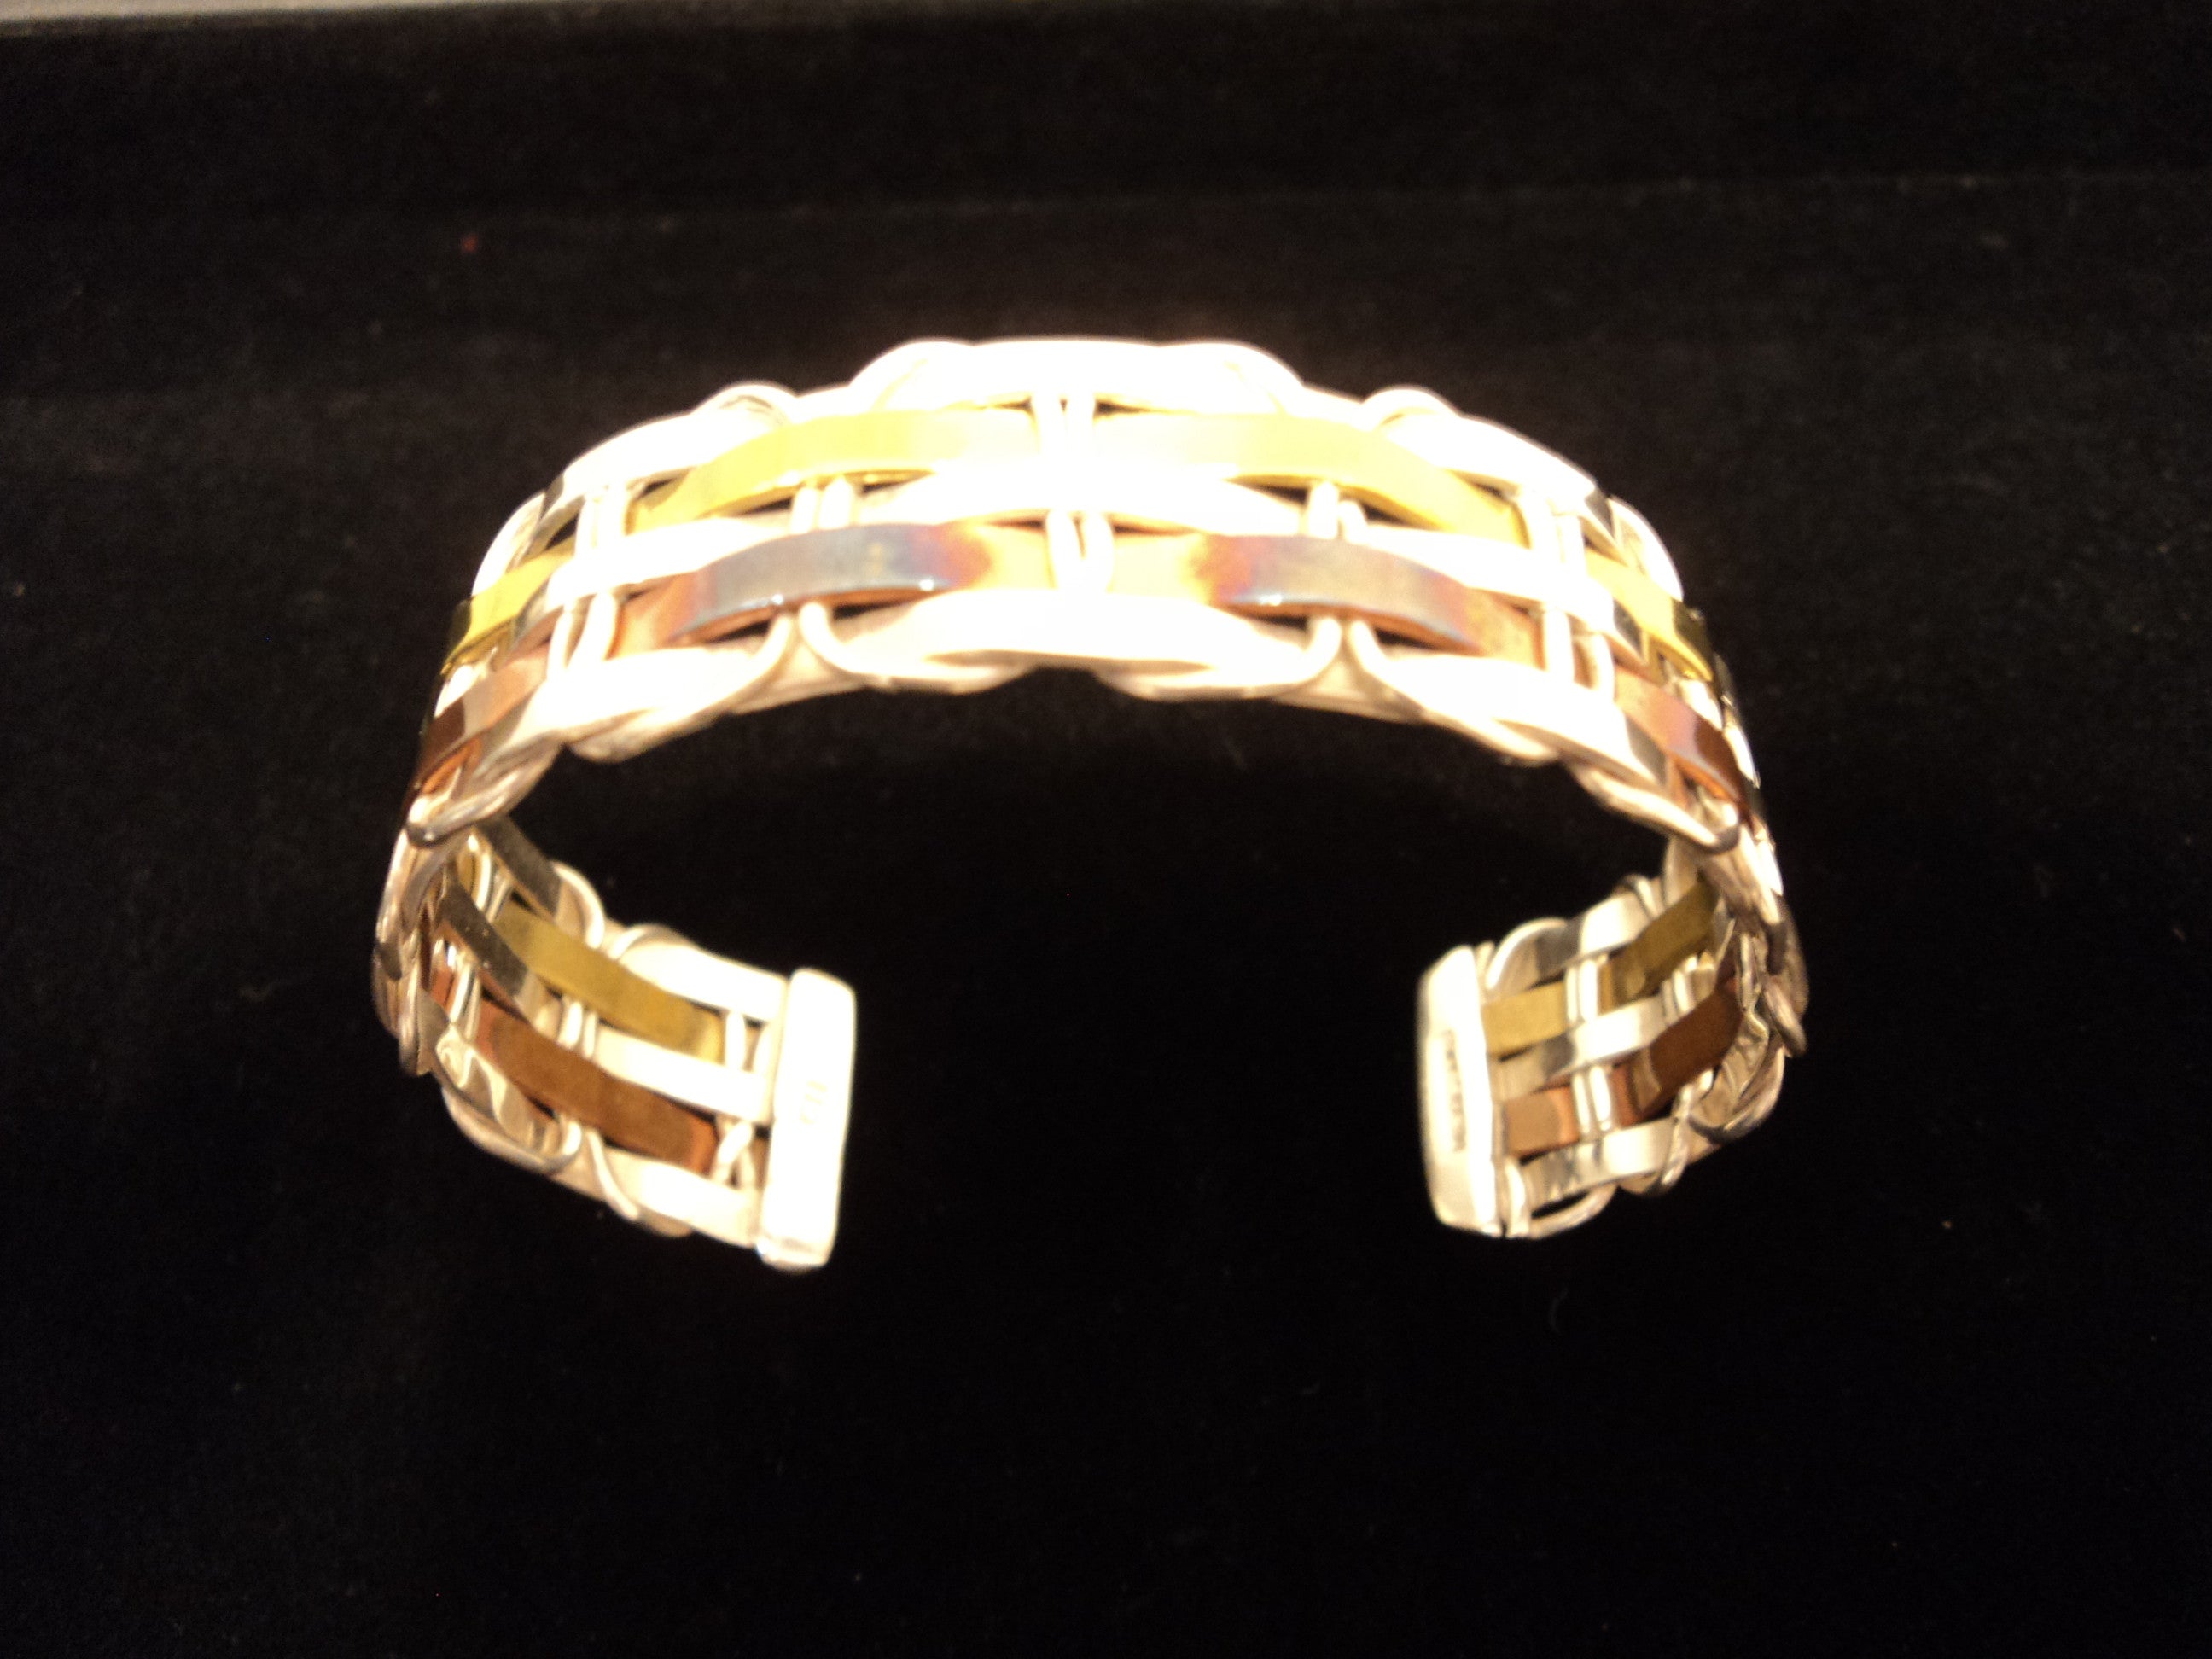 Woven Silver, Copper and Brass Cuff Bracelet